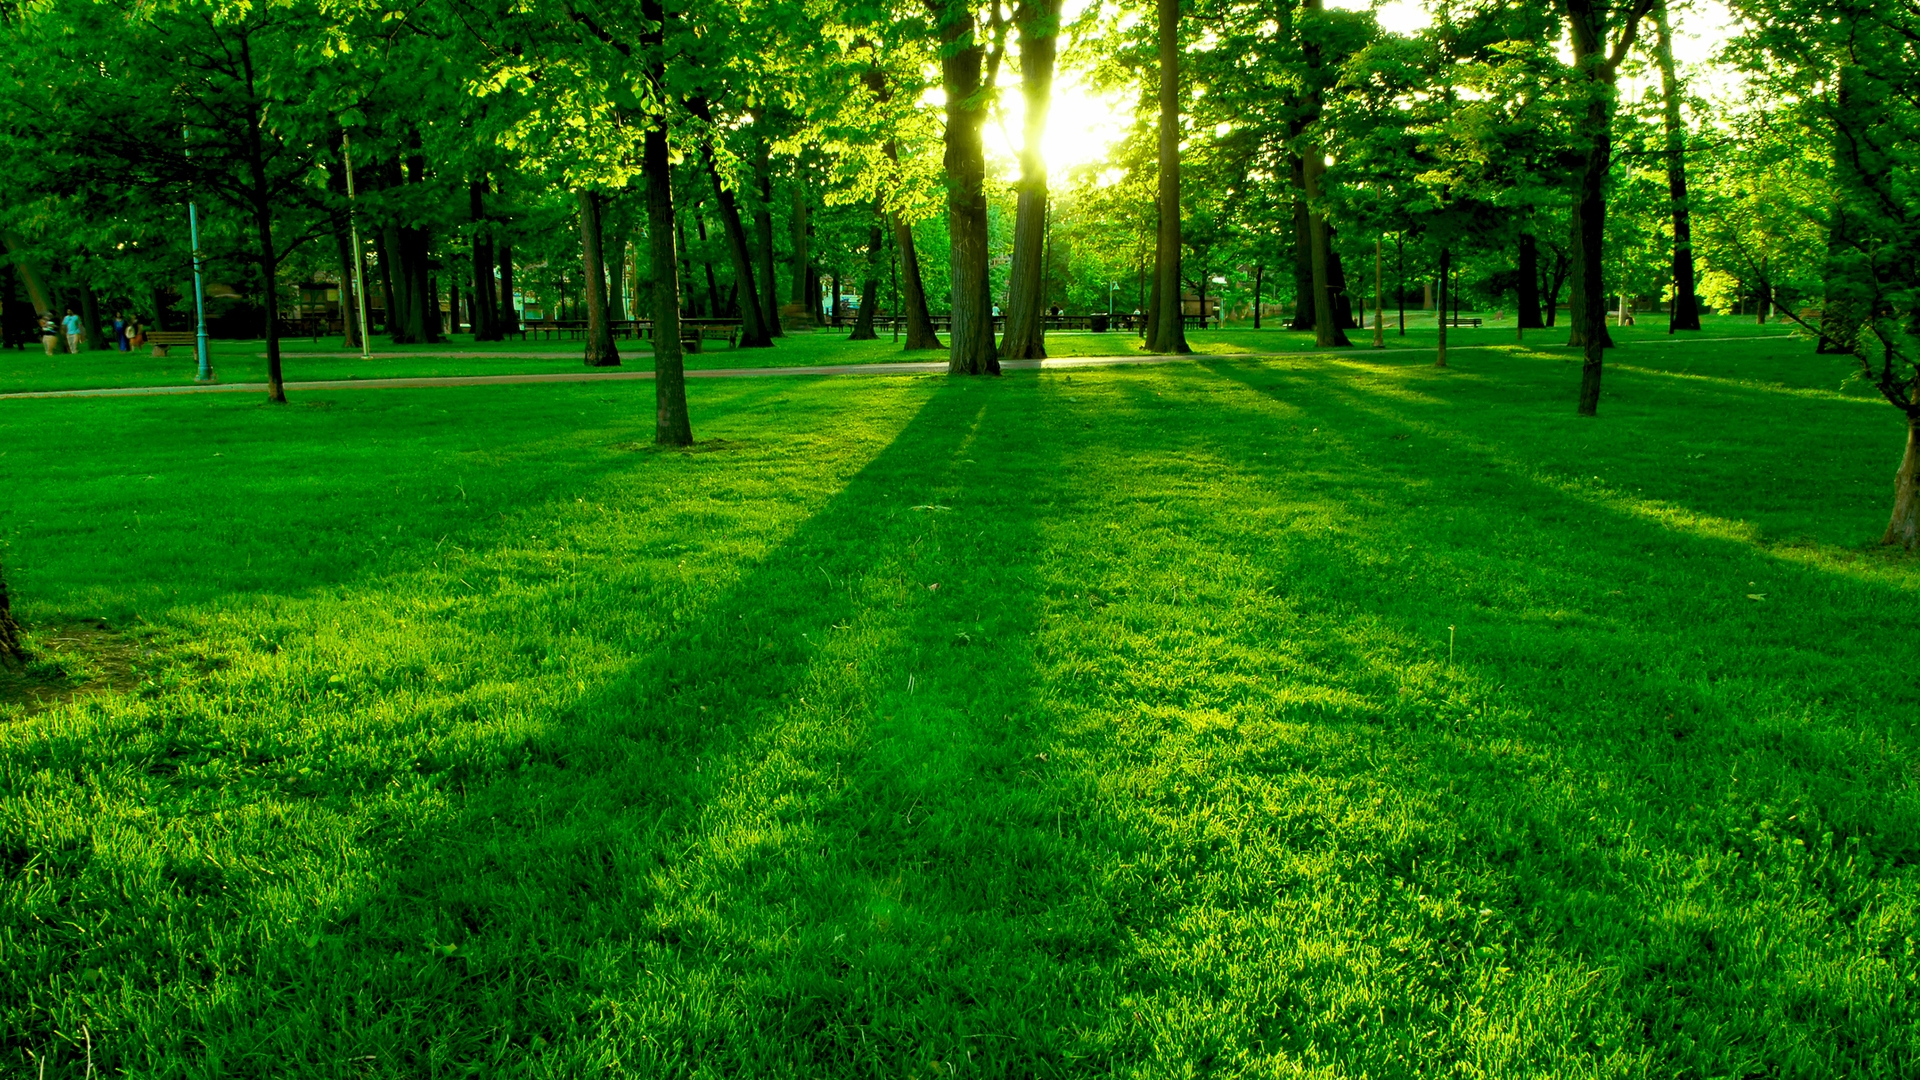 Desktop Wallpaper Green Grass Filed Of Garden, Park, Hd Image, Picture,  Background, Ol4wzc